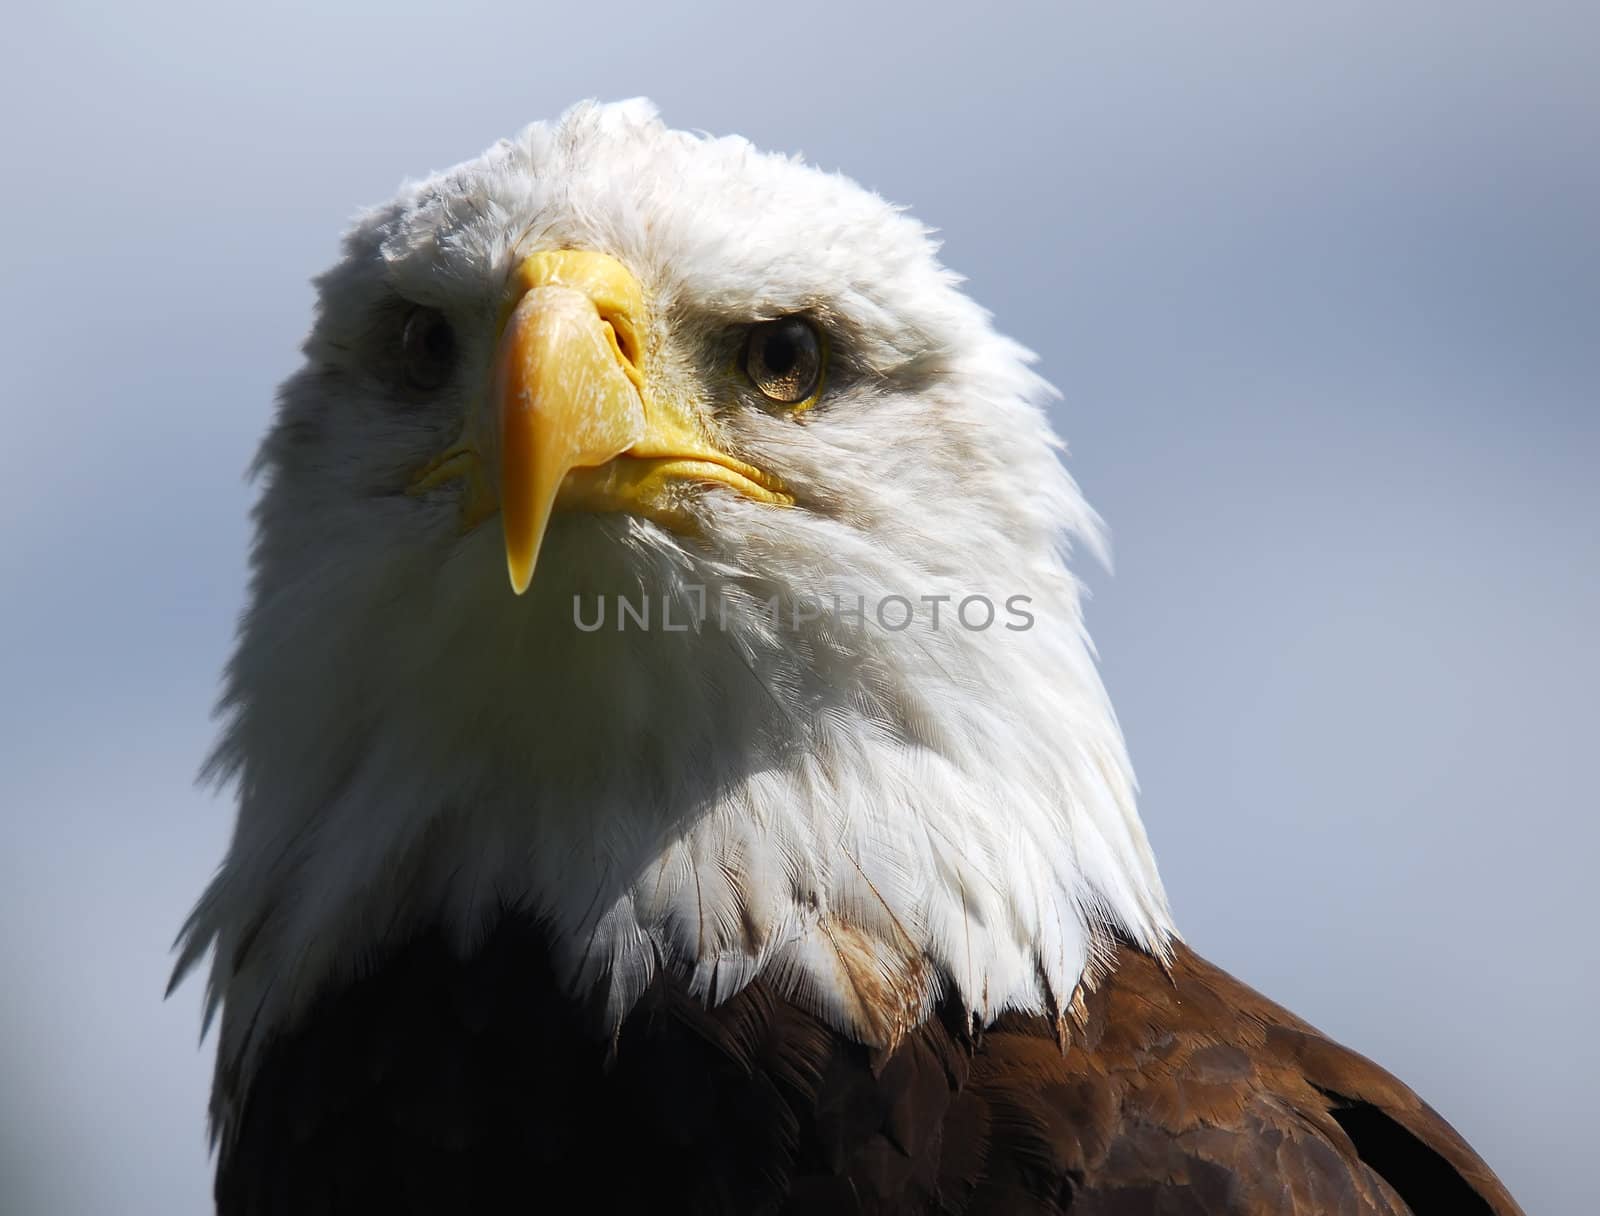 Bald eagle (Haliaeetus leucocephalus) by nialat